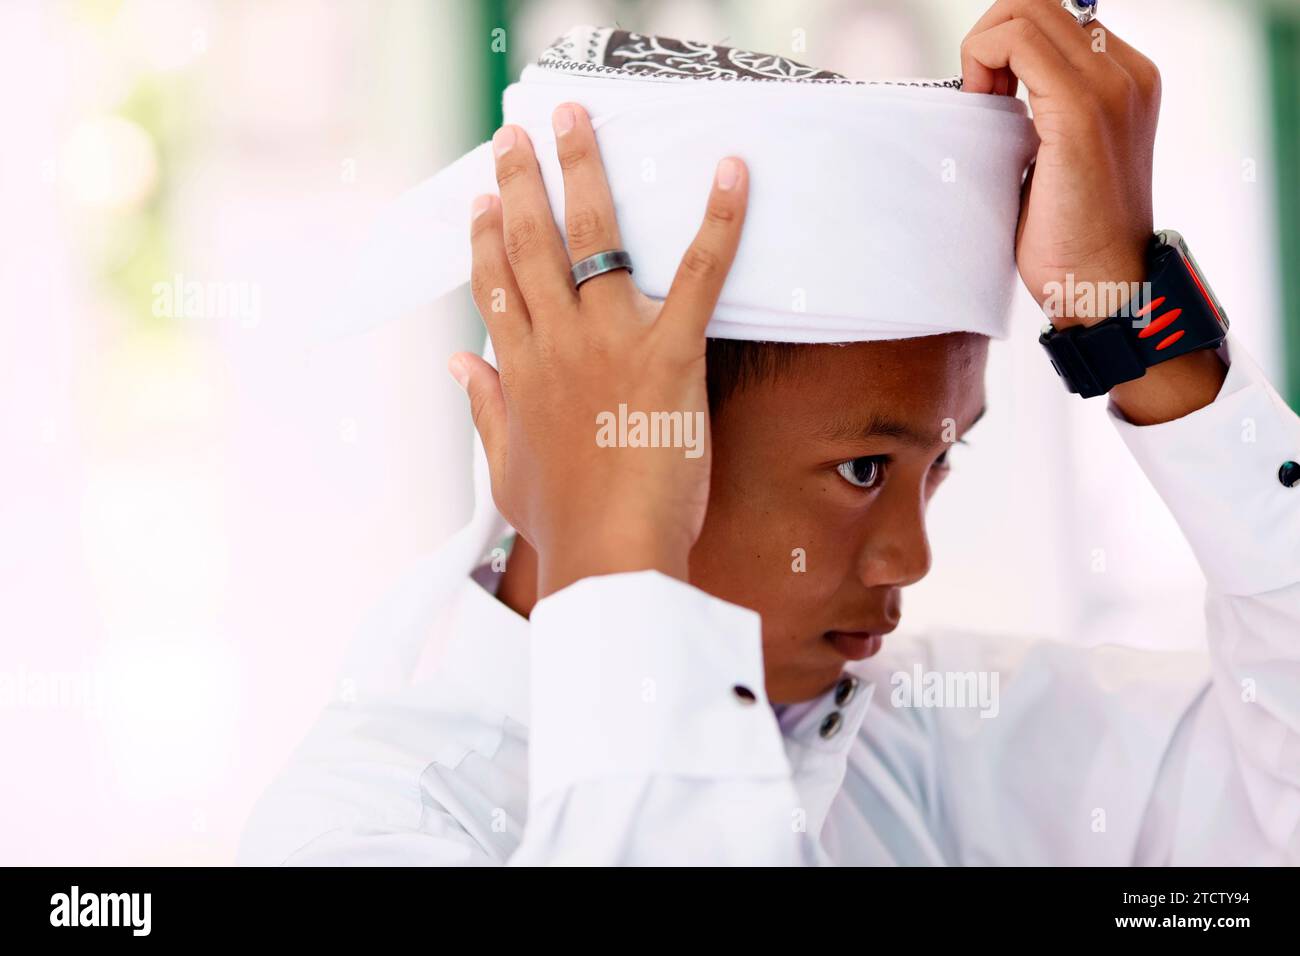 Jamiul Azhar mosque. The friday prayer (salat). Young boy. Portrait.  Vietnam. Stock Photo